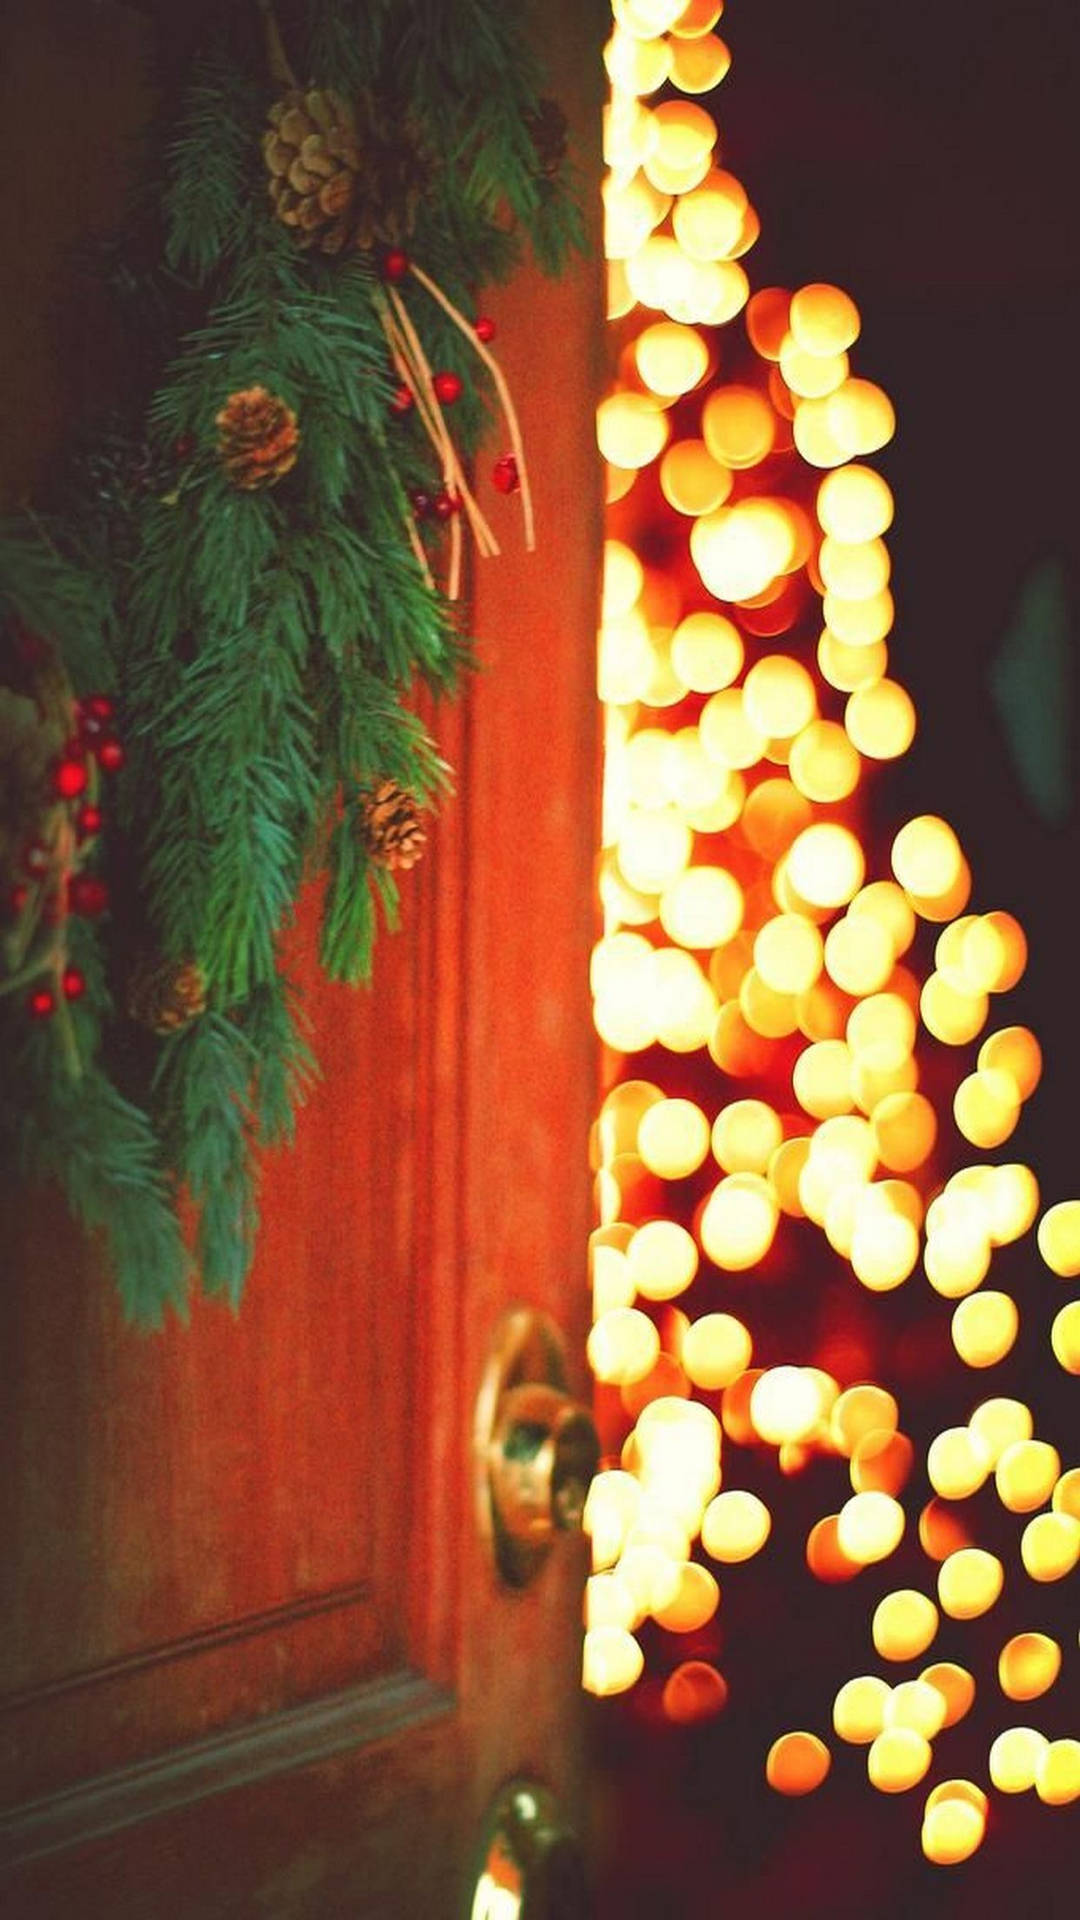 Iluminalas Fiestas Con Un Fondo Festivo De Luces De Navidad En Cadena. Fondo de pantalla